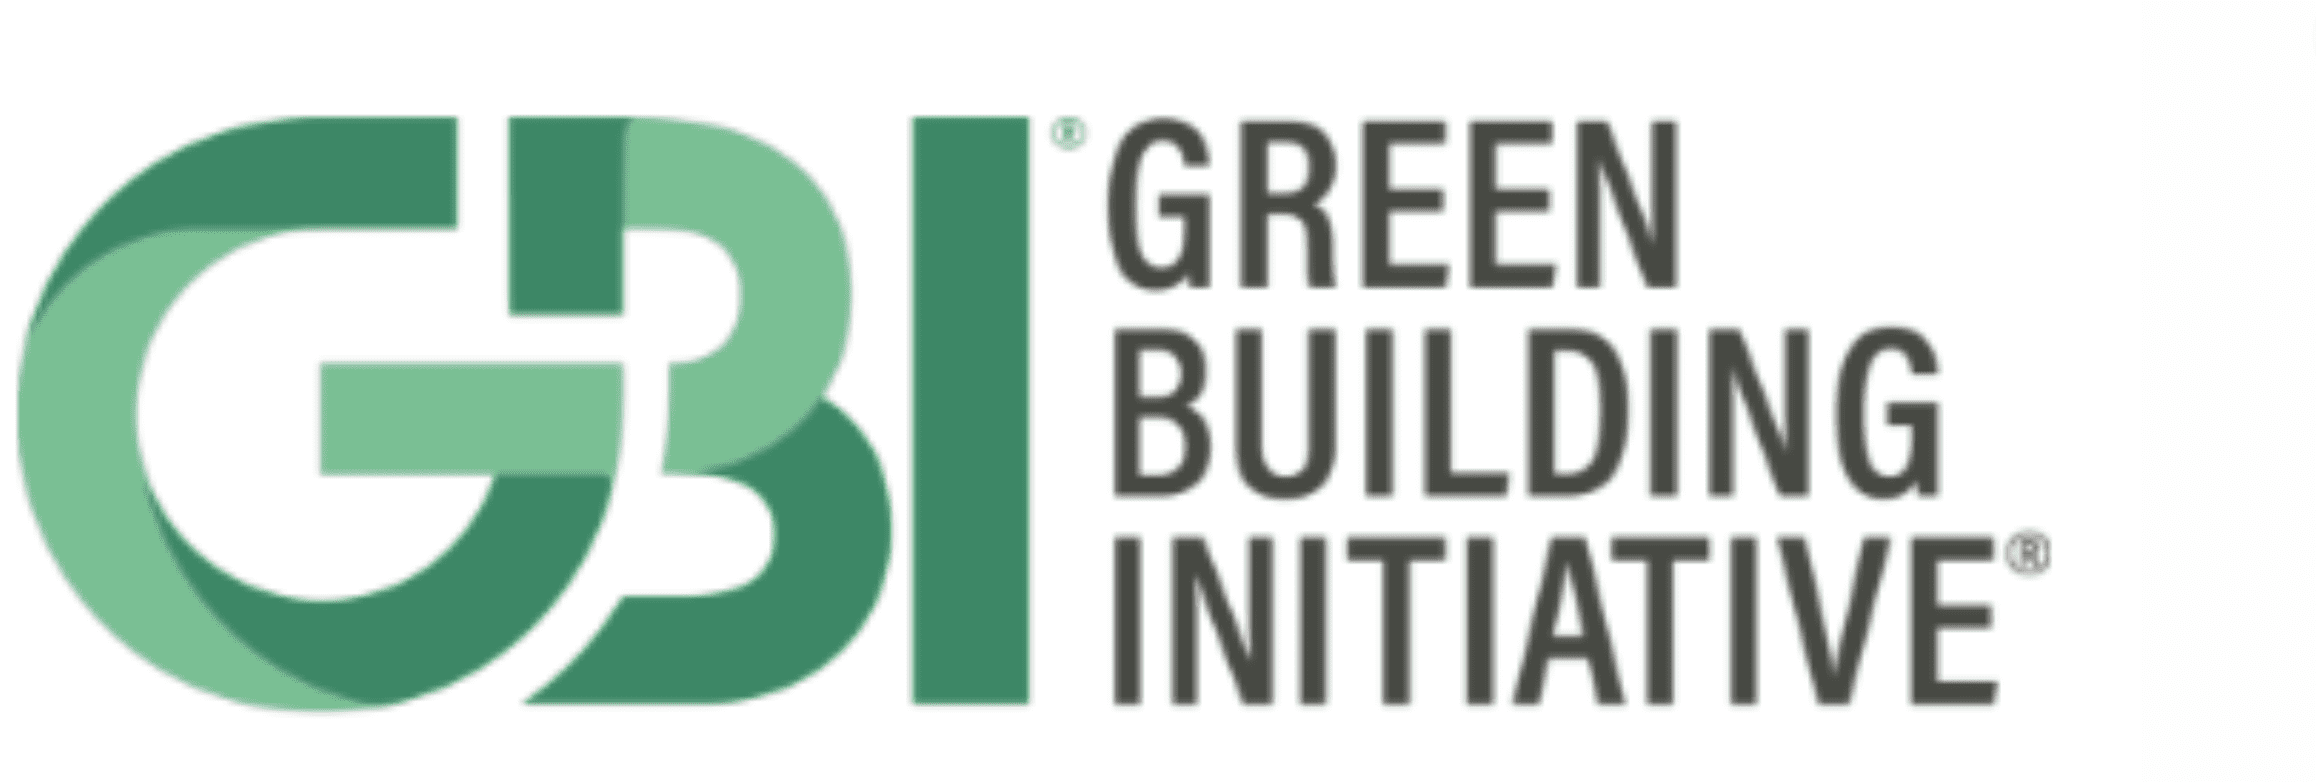 Green Building Initiative logo